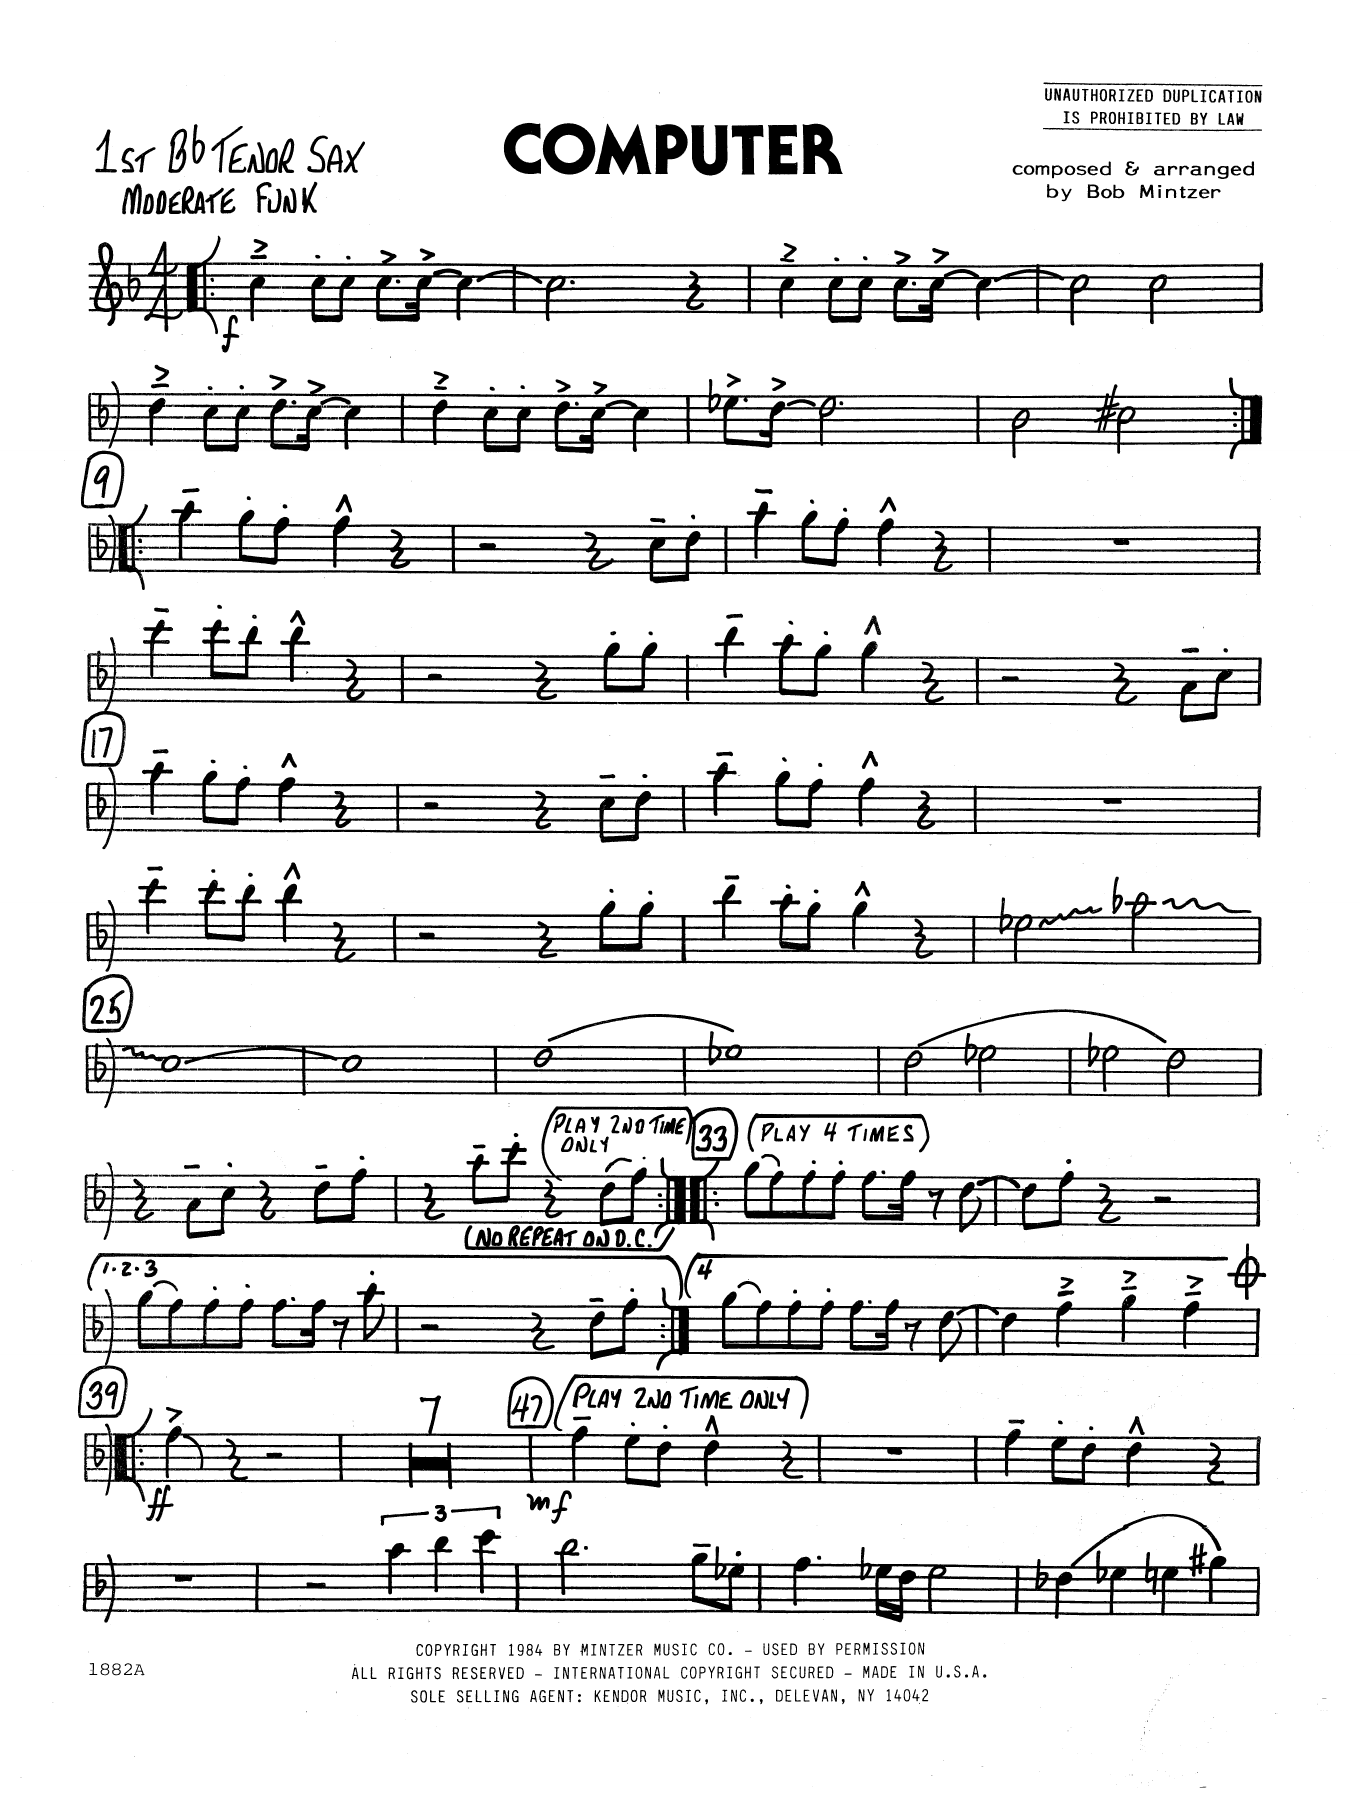 Download Bob Mintzer Computer - 1st Tenor Saxophone Sheet Music